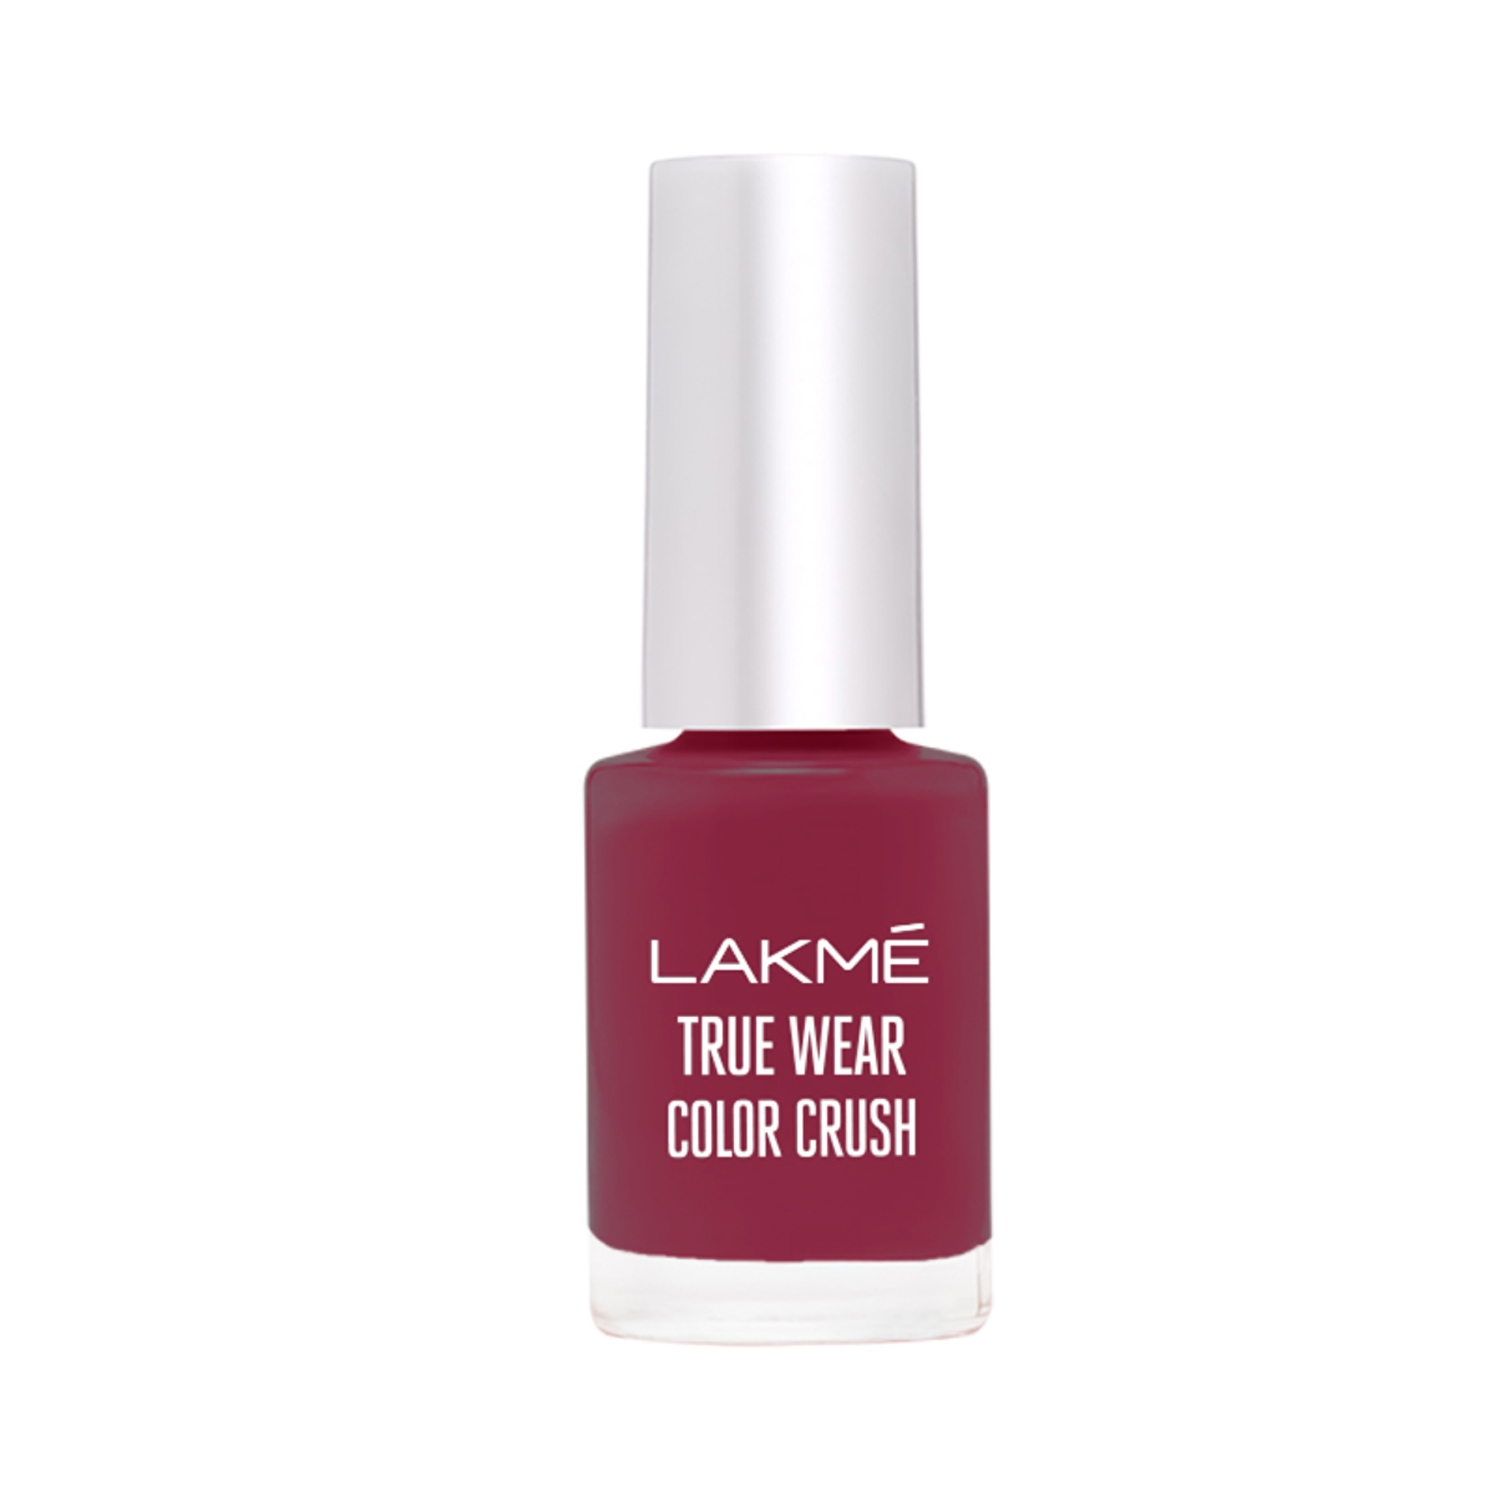 Lakme True Wear Color Crush Nail Polish - 19 (6ml)